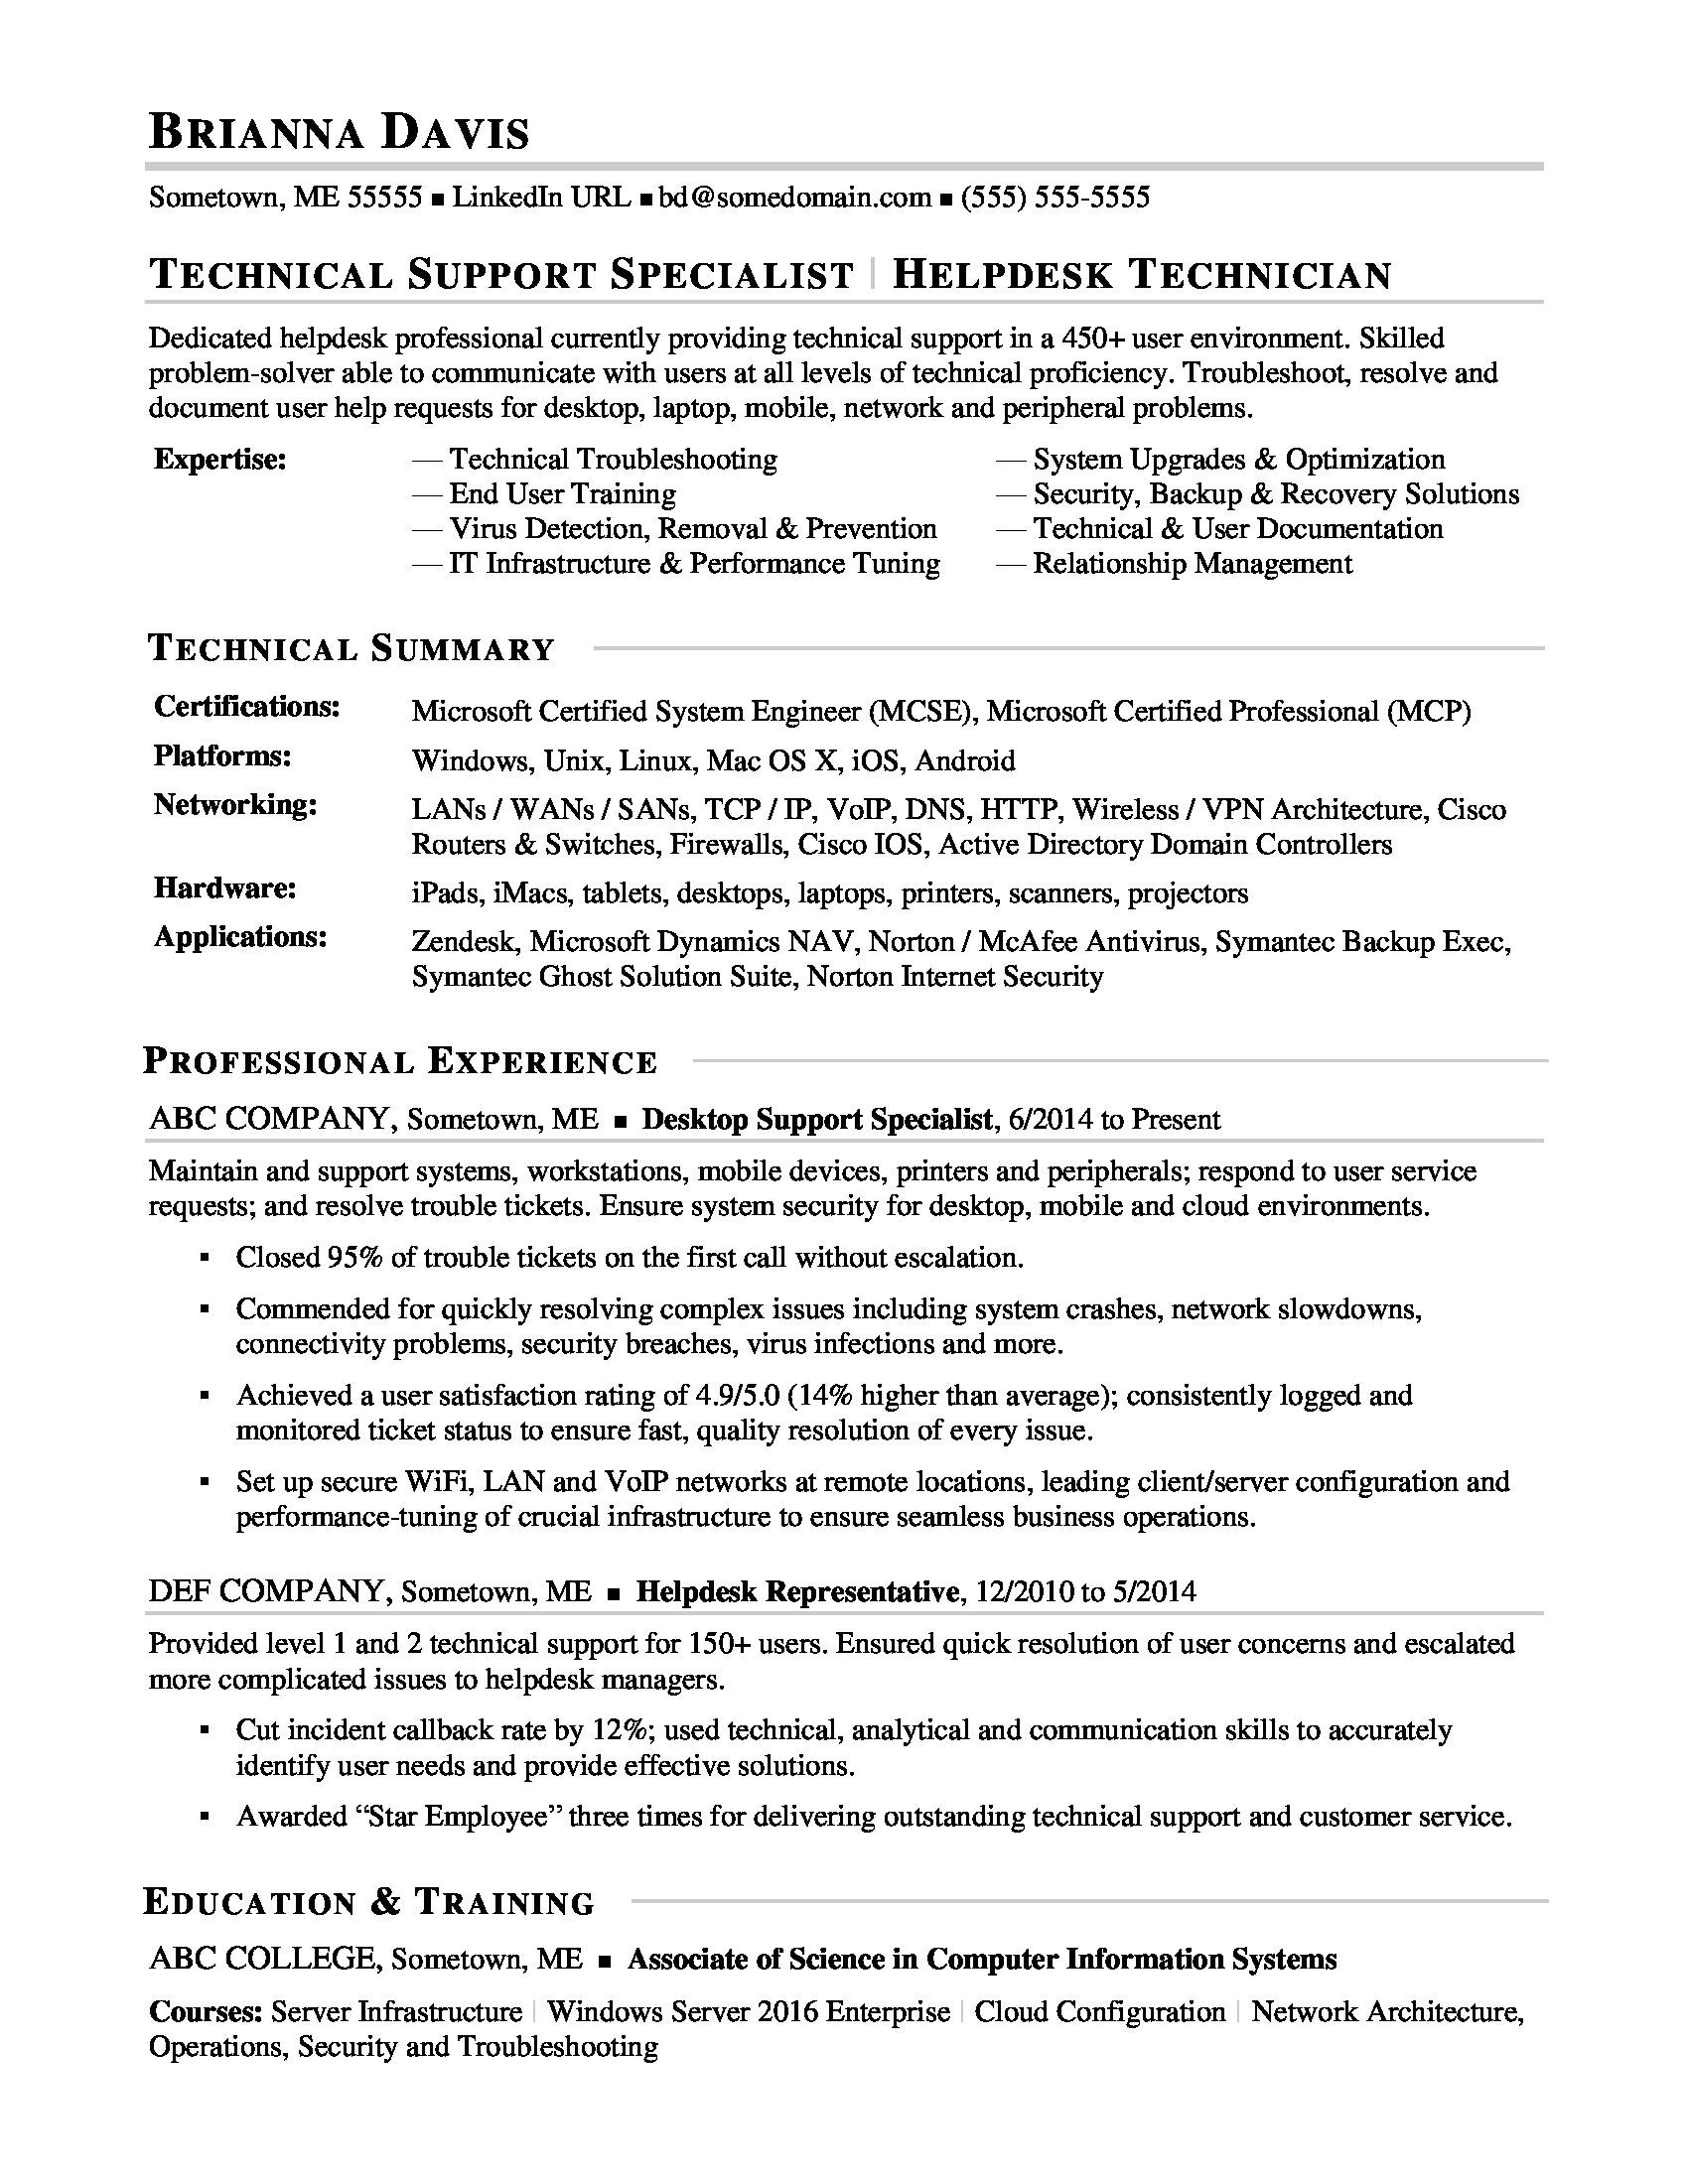 Sample Help Desk Technician Level 1 Resumes Sample Resume for Experienced It Help Desk Employee Monster.com